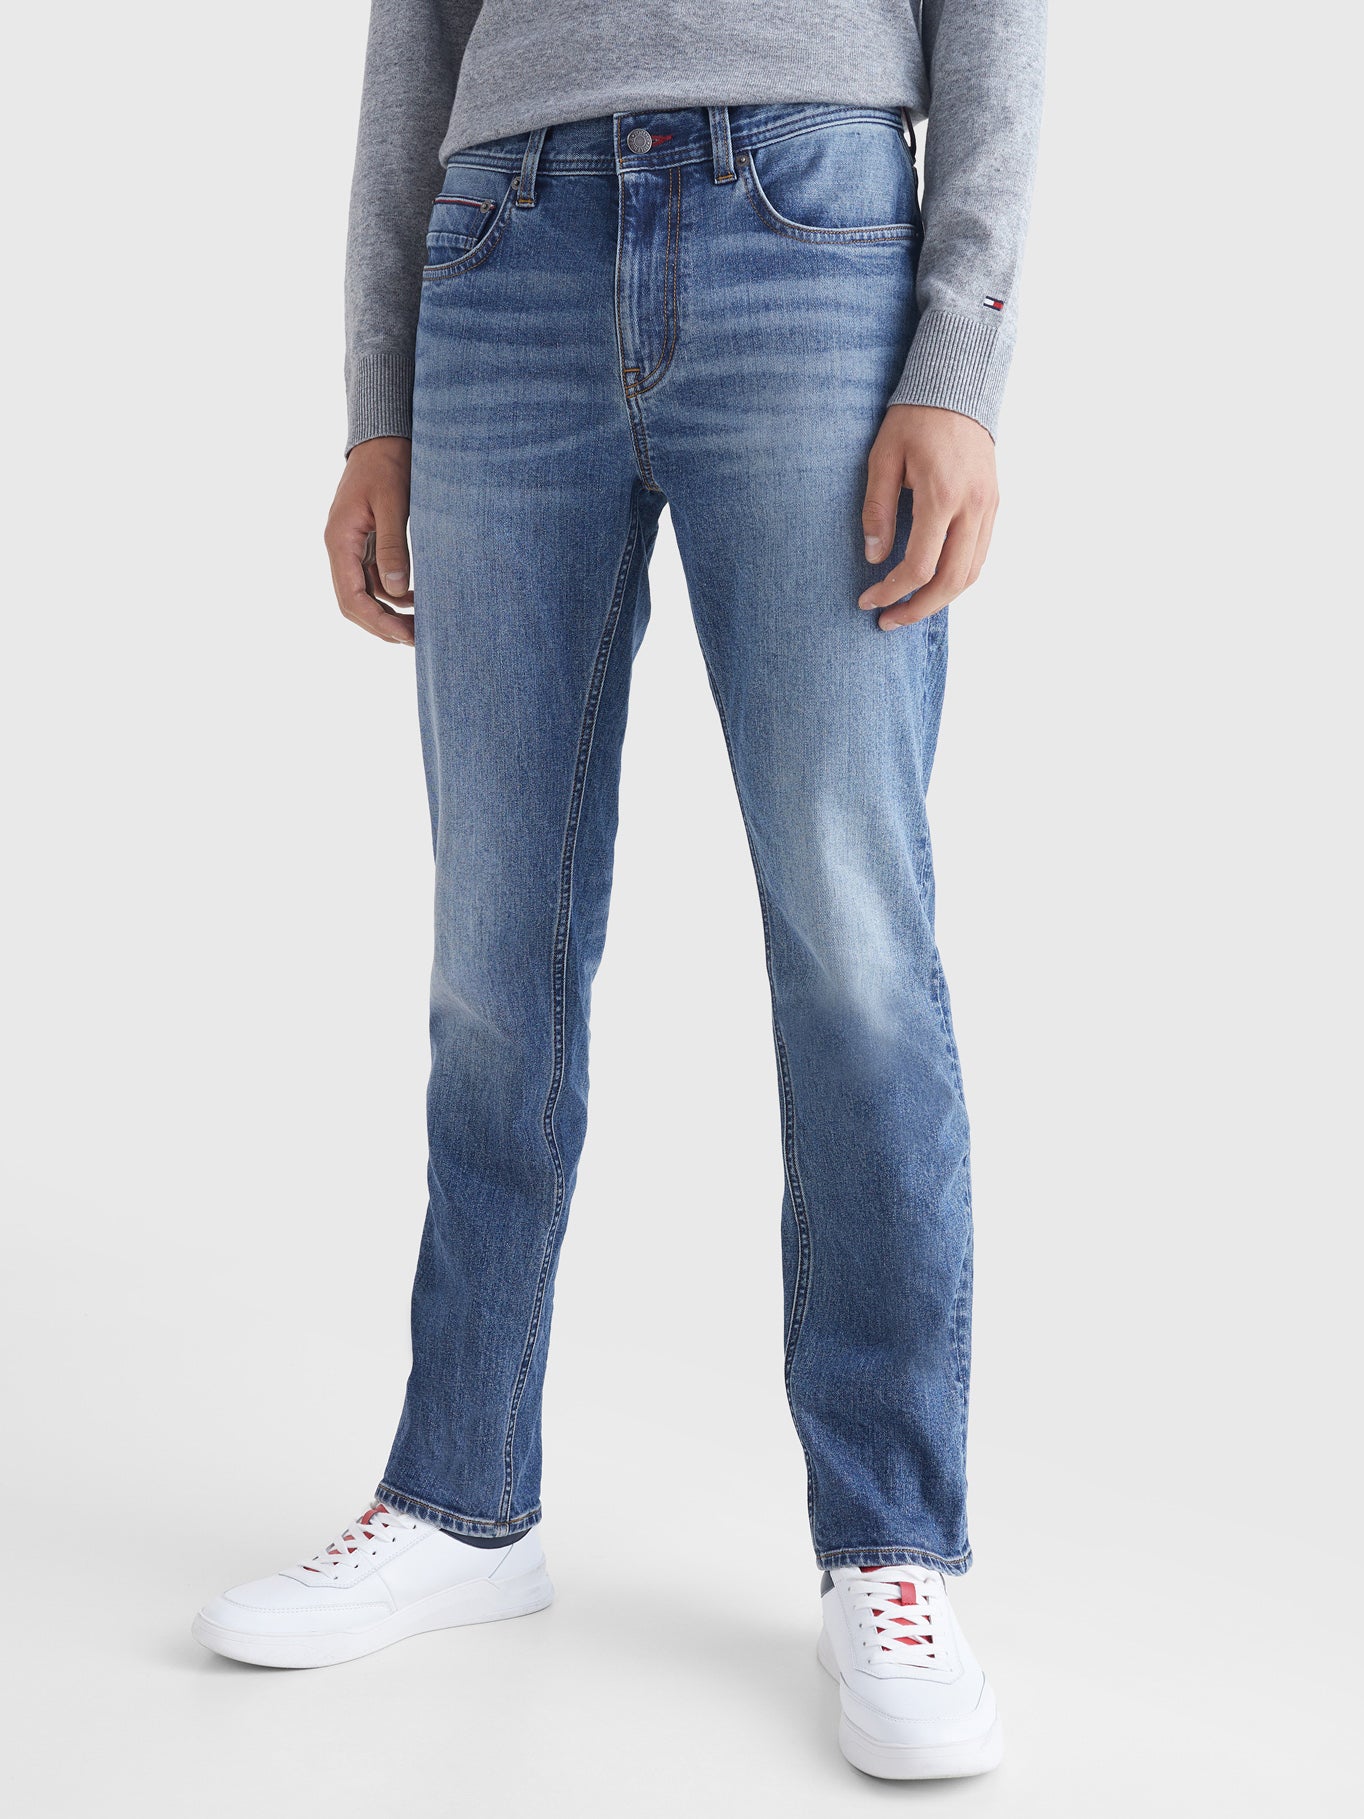 pantalon-jeans-tommy-hilfiger-p-caballeros-2